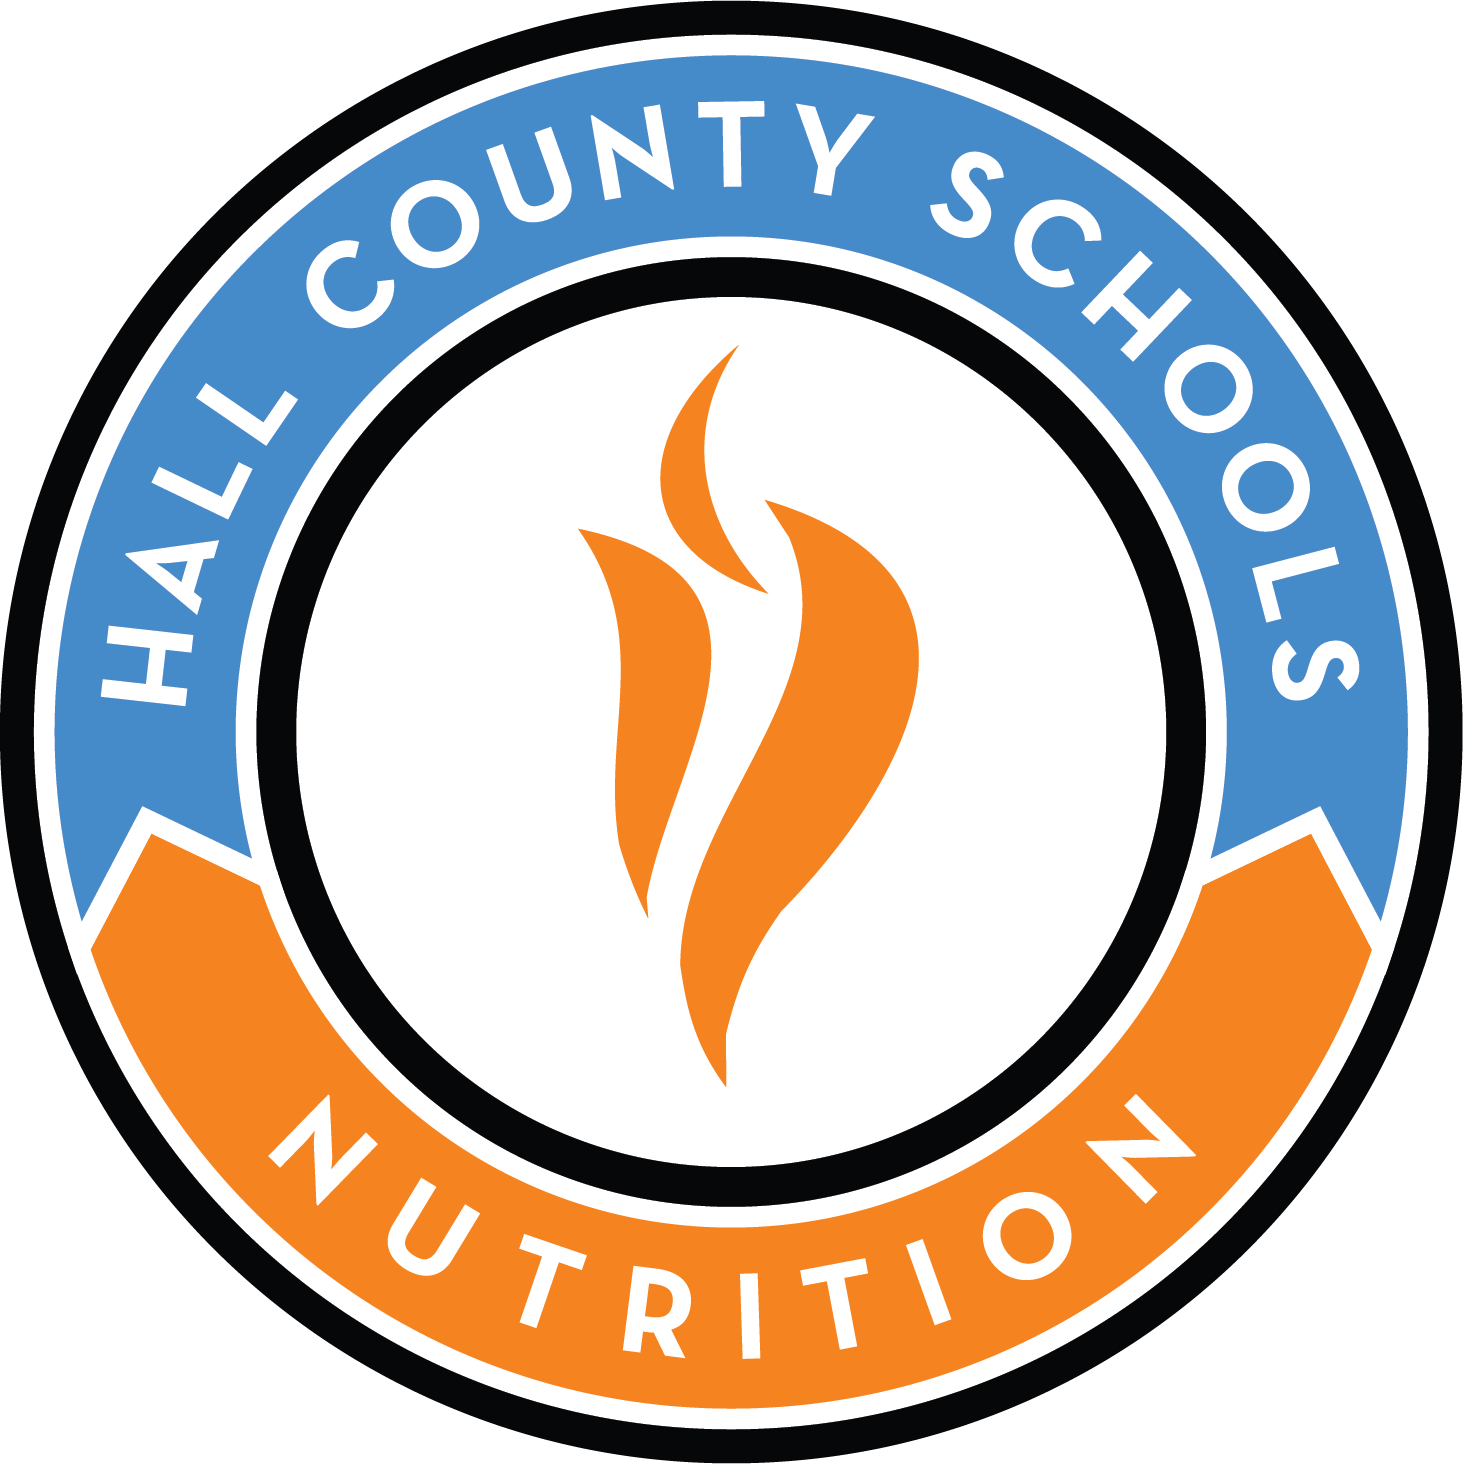 Hall County School Nutrition